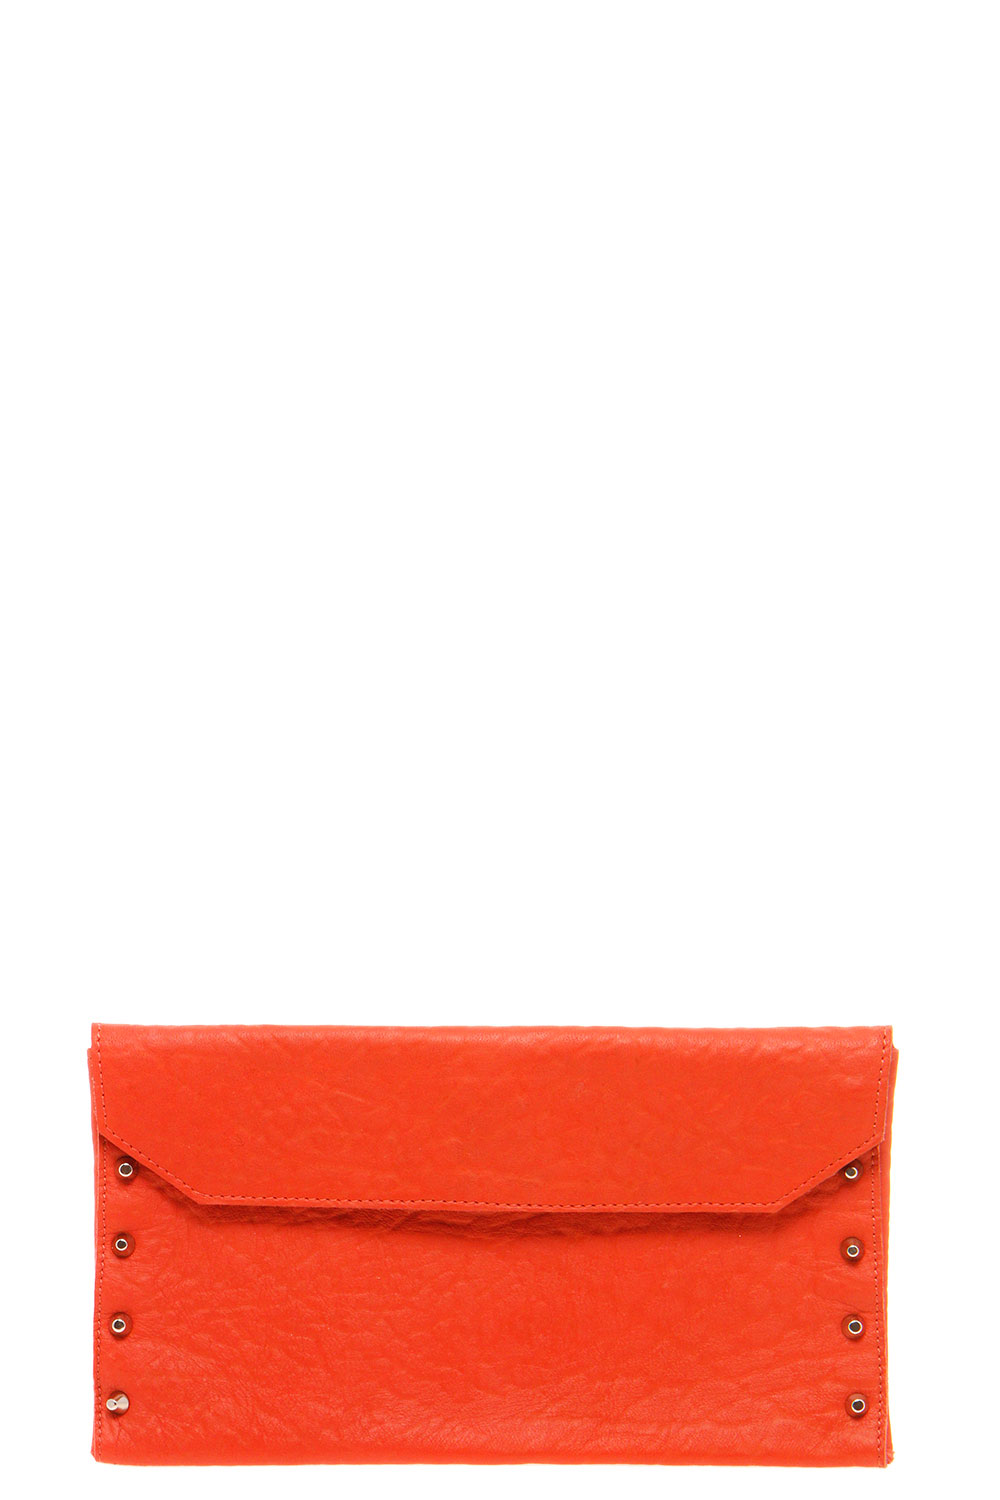 Boutique Tilly Leather Stud Clutch Bag -